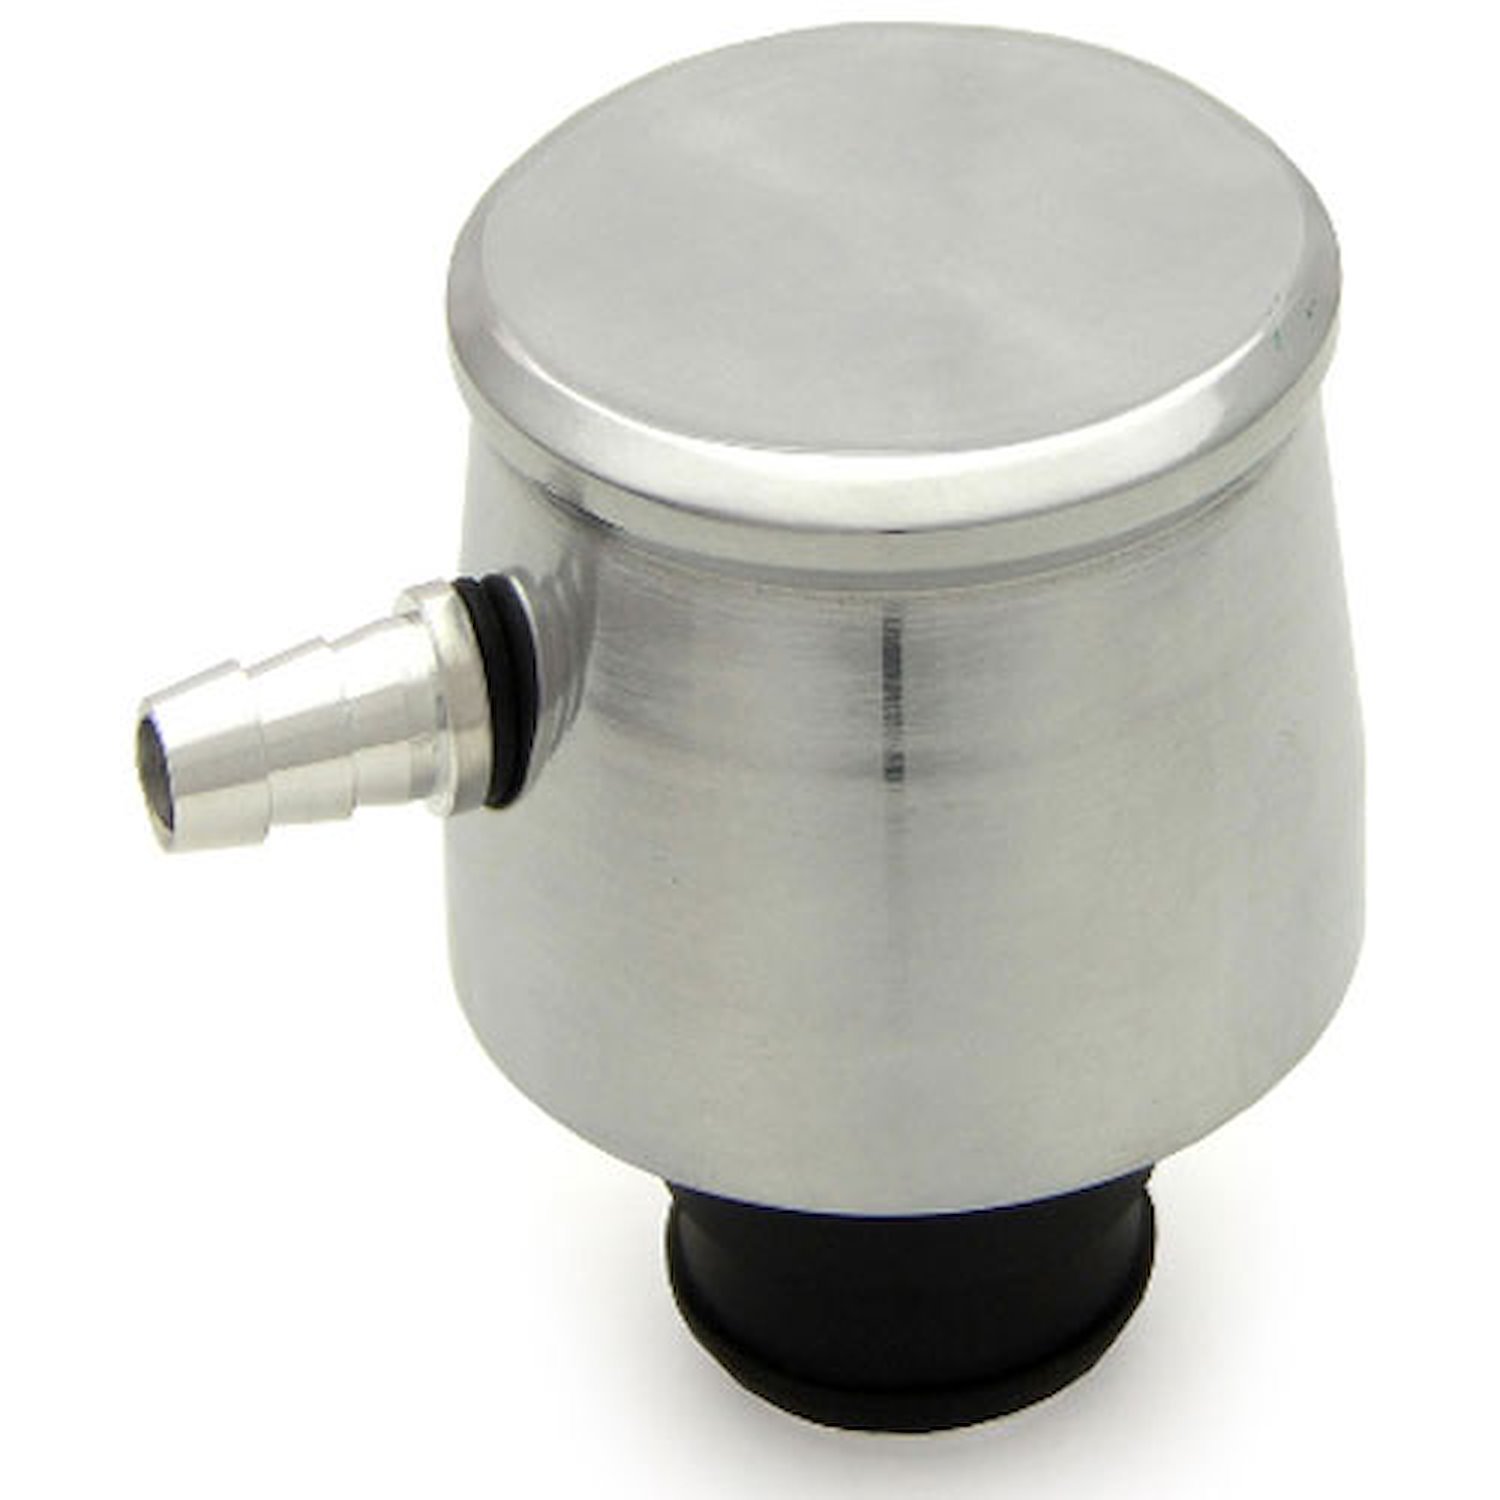 Aluminum Round Valve Cover Breather Cap/Grommet With PCV Vent Tube (Push In)